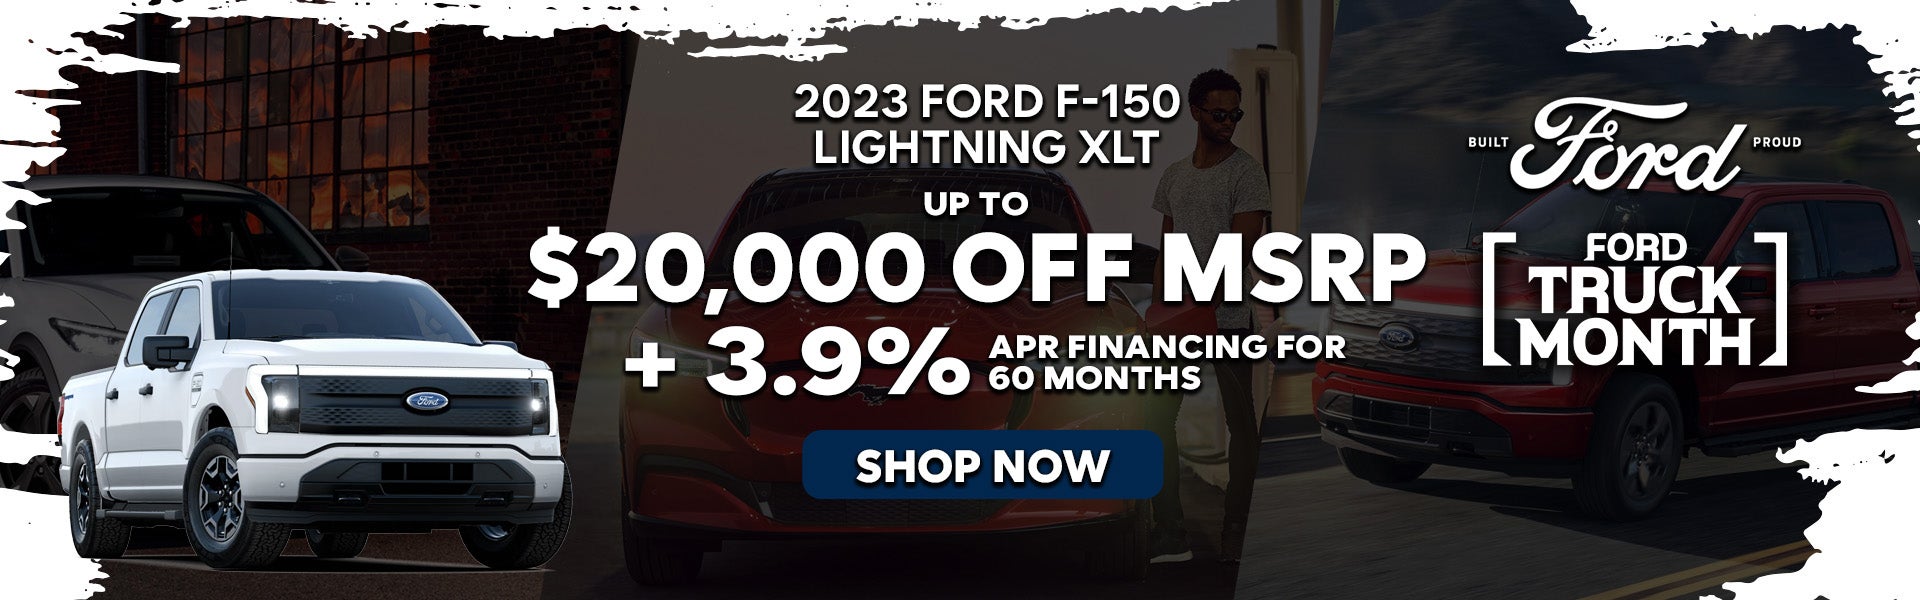 2023 Ford F-150 Lightning XLT Special Offer